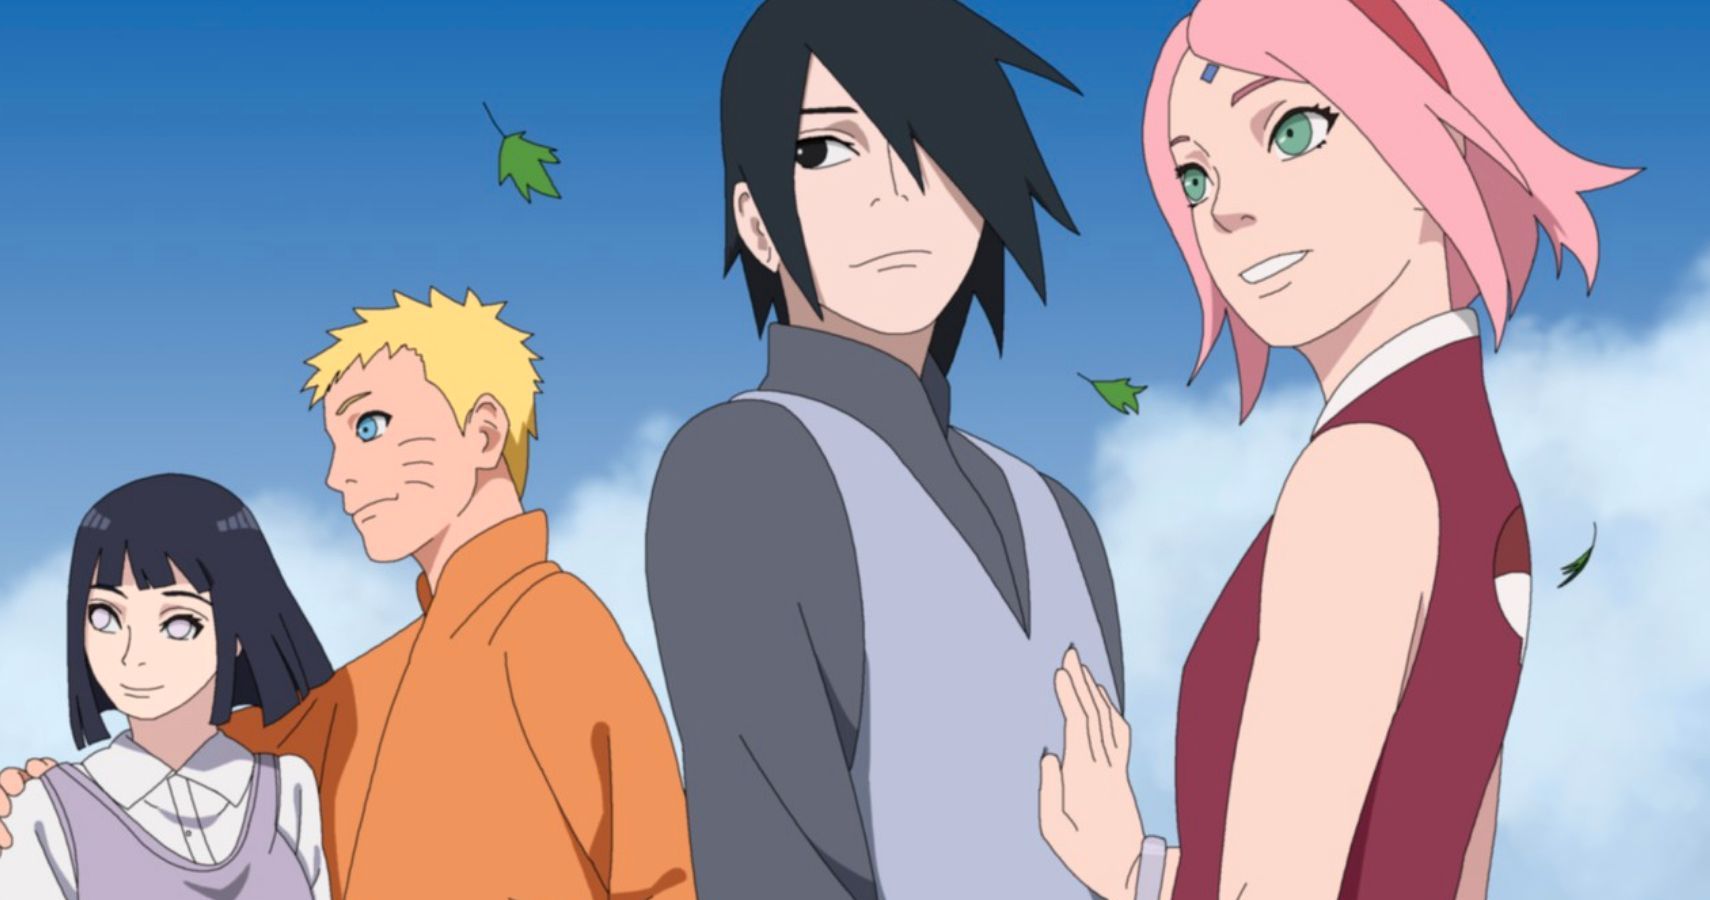 4 Naruto characters as adults